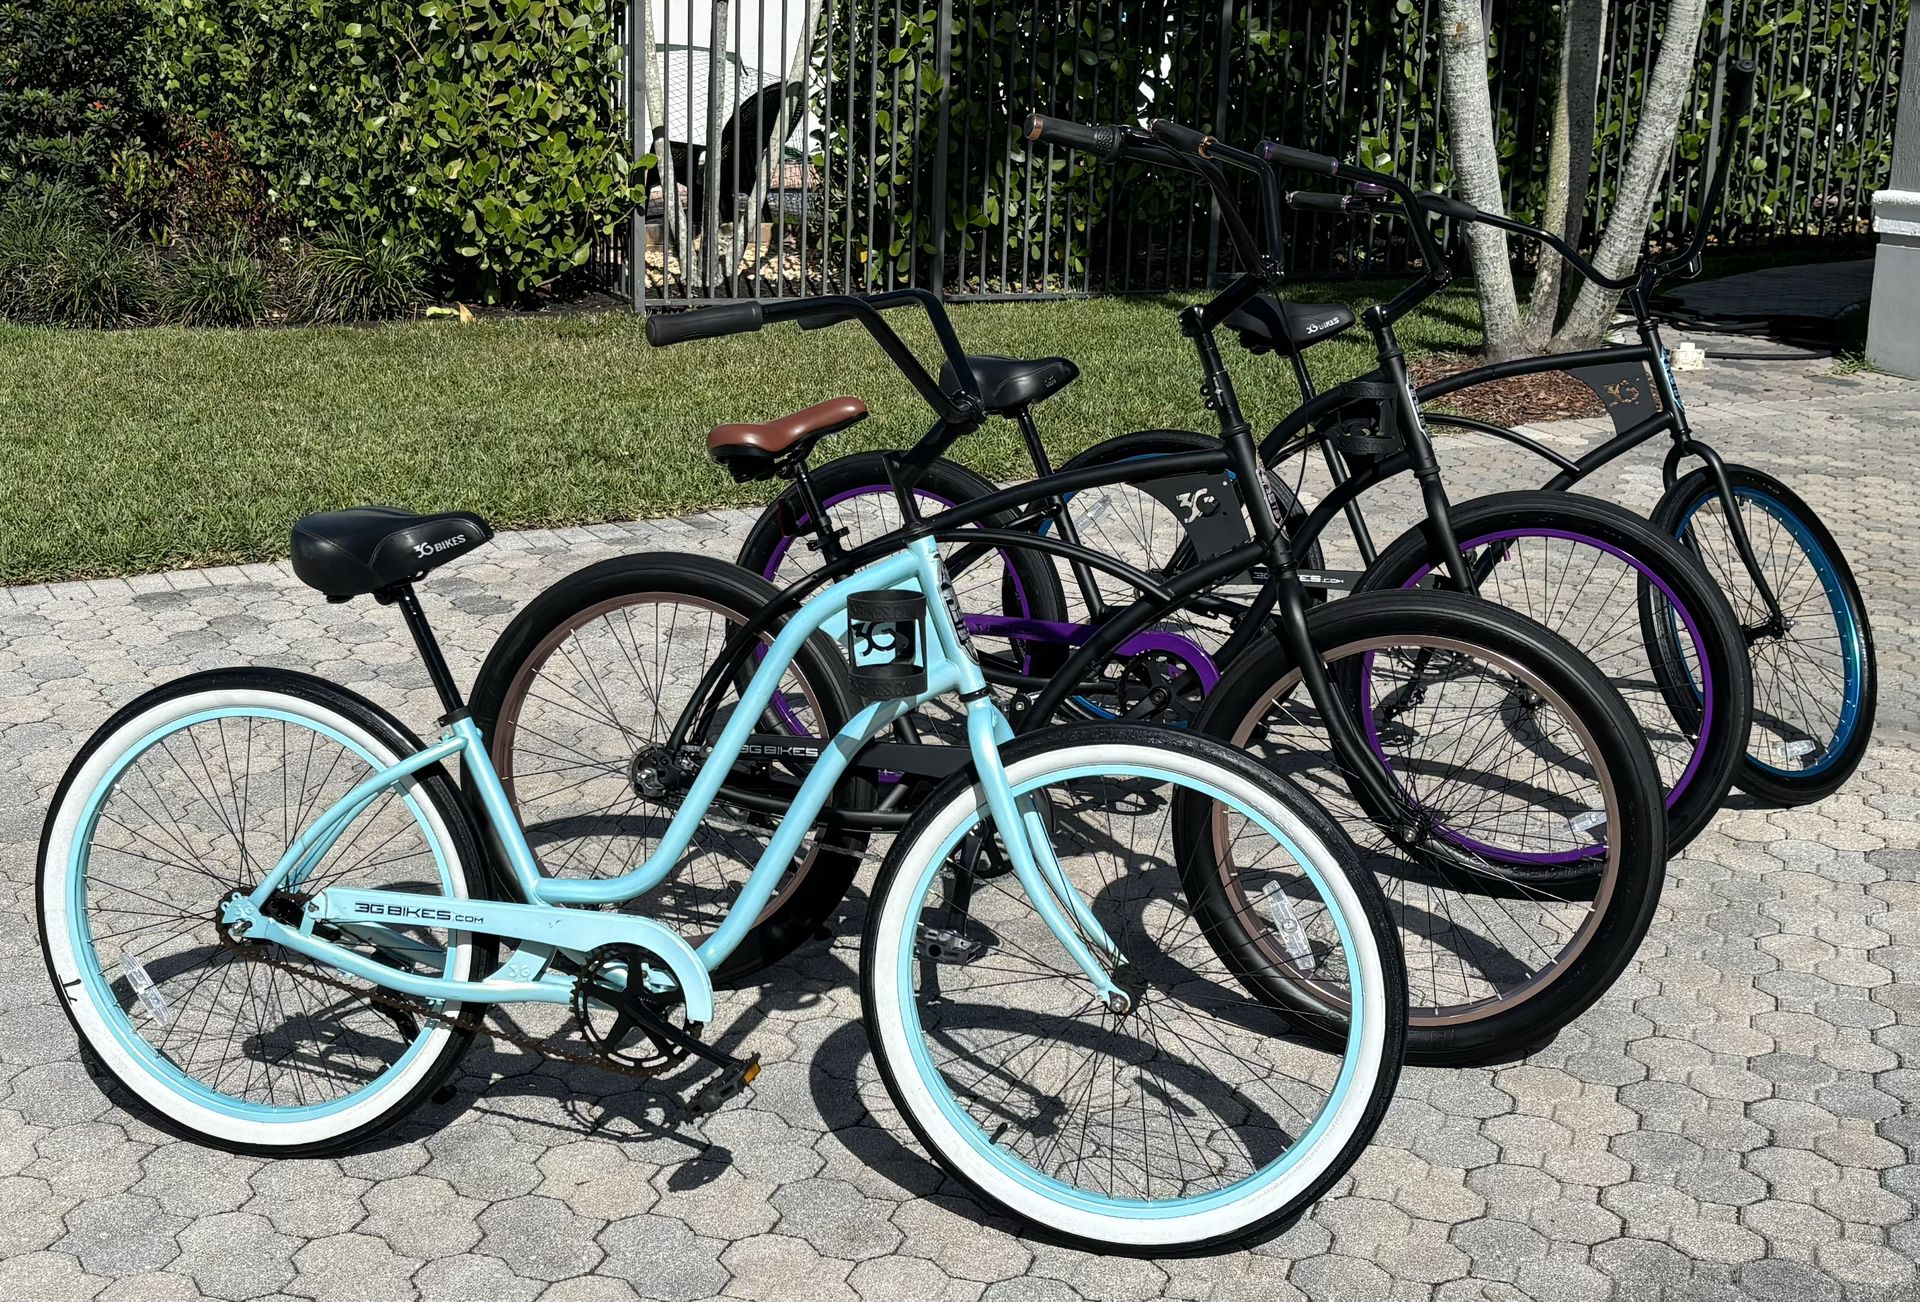 3G Bikes Long Beach California beach cruiser Bicycles (starting price at $399 and up)